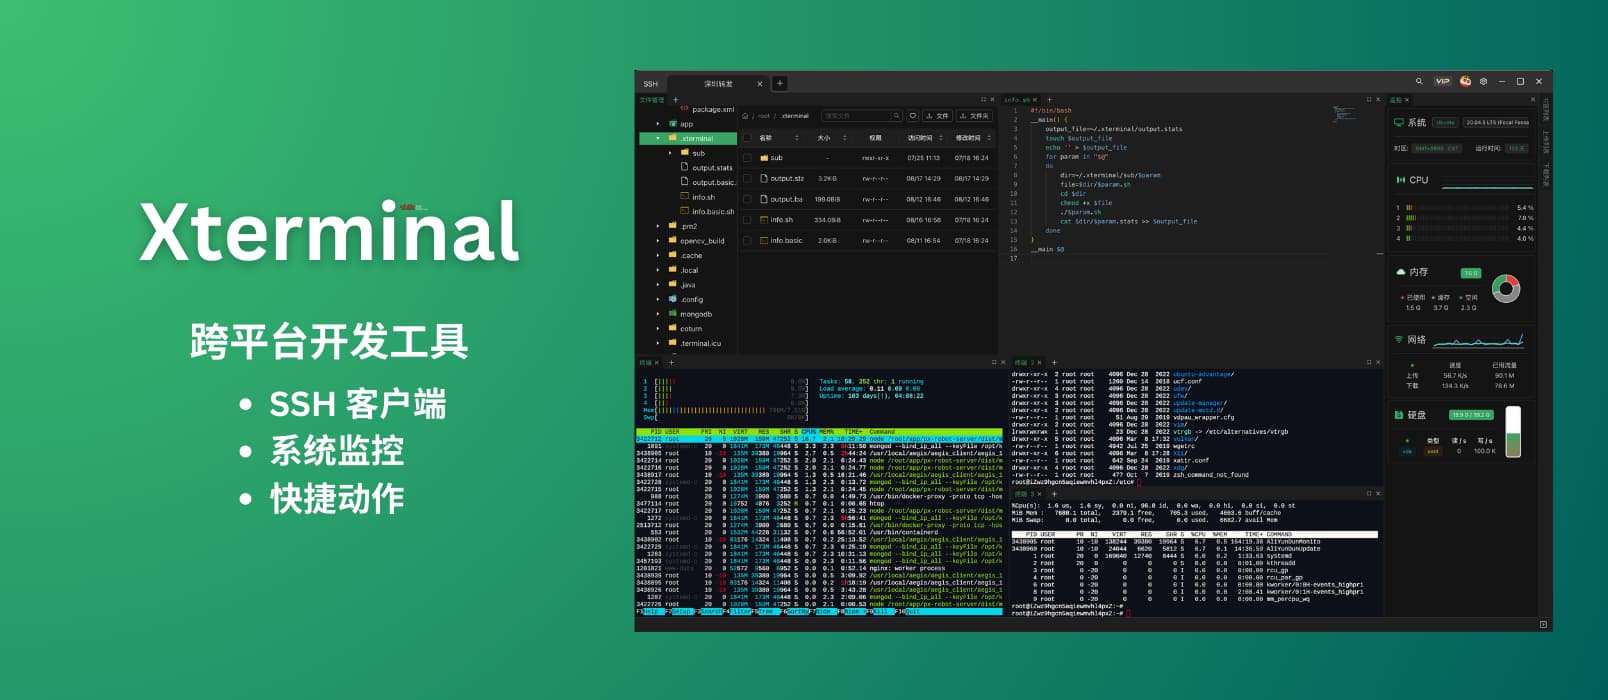 Xterminal - 跨平台开发工具：SSH 客户端，不止是终端，还支持 CPU、内存、网络监控，快捷动作等